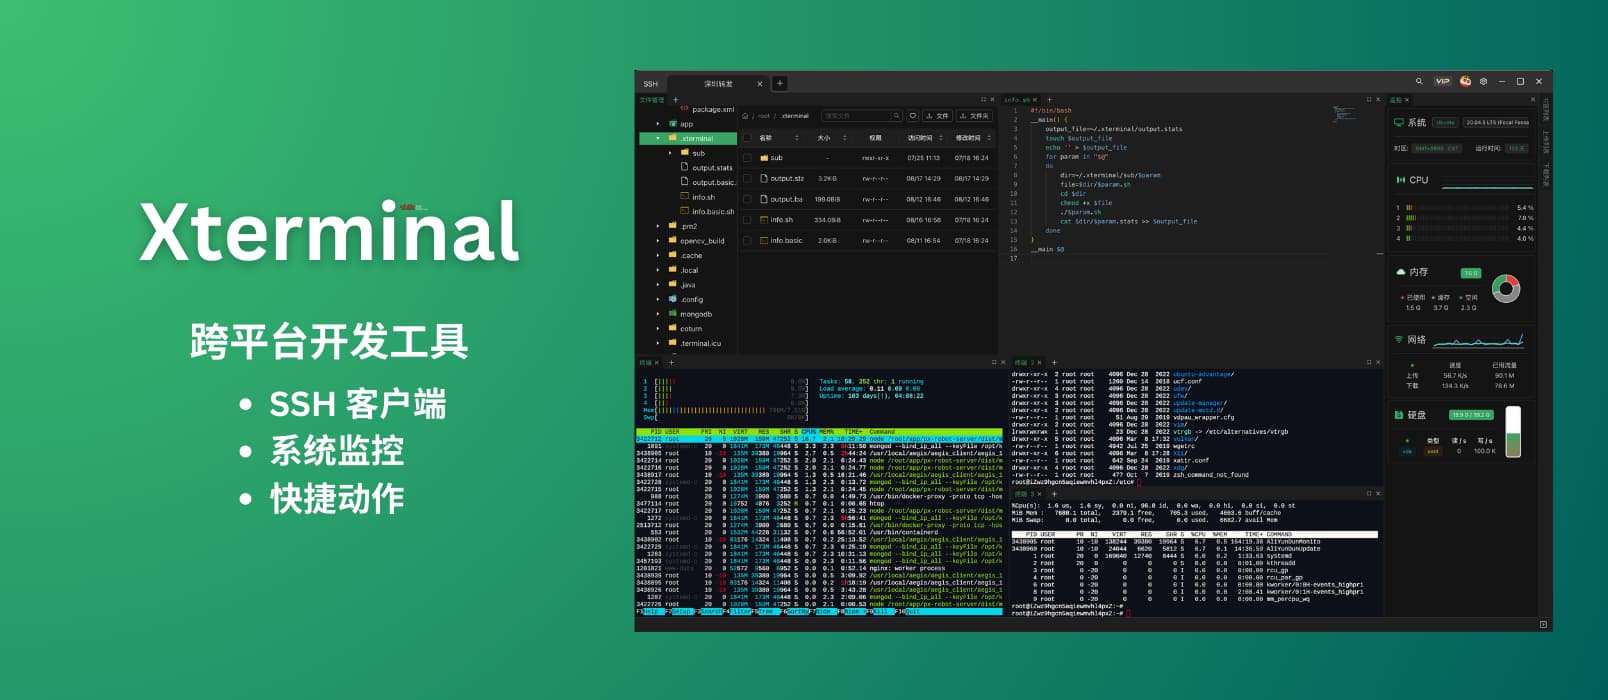 Xterminal - 跨平台开发工具：SSH 客户端，不止是终端，还支持 CPU、内存、网络监控，快捷动作等